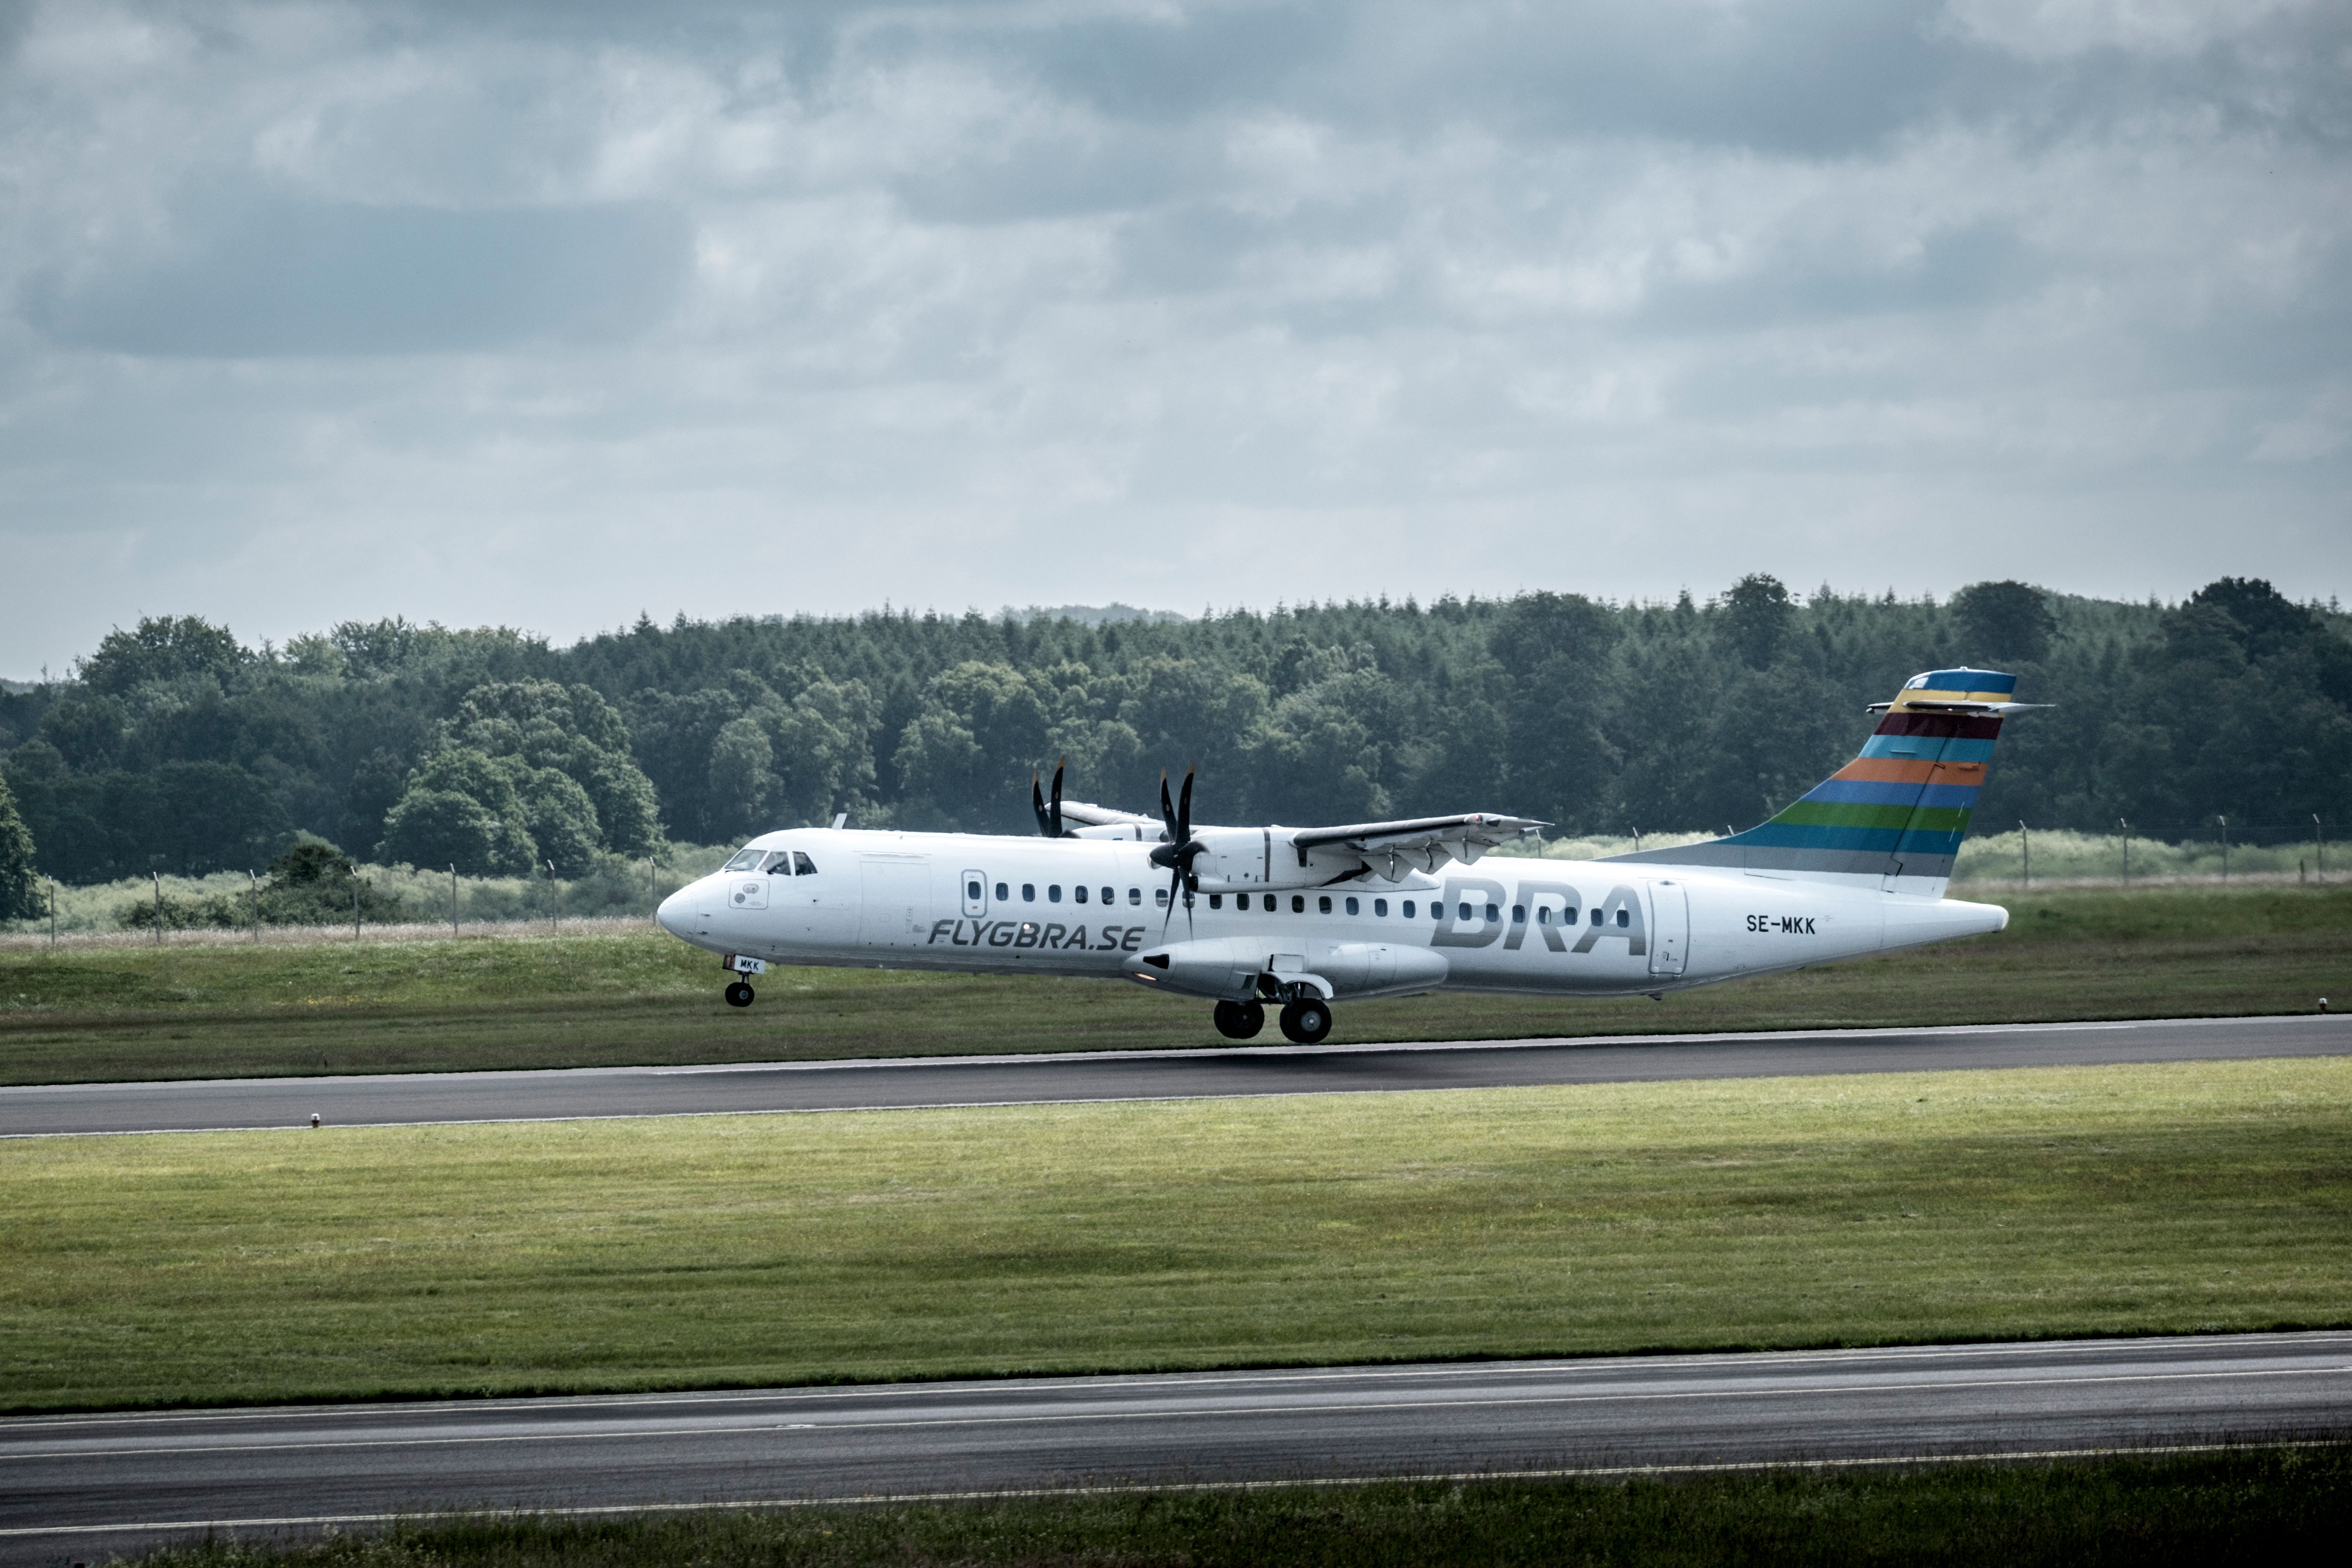 BRA ATR 72-600 aircraft taking off from runway 